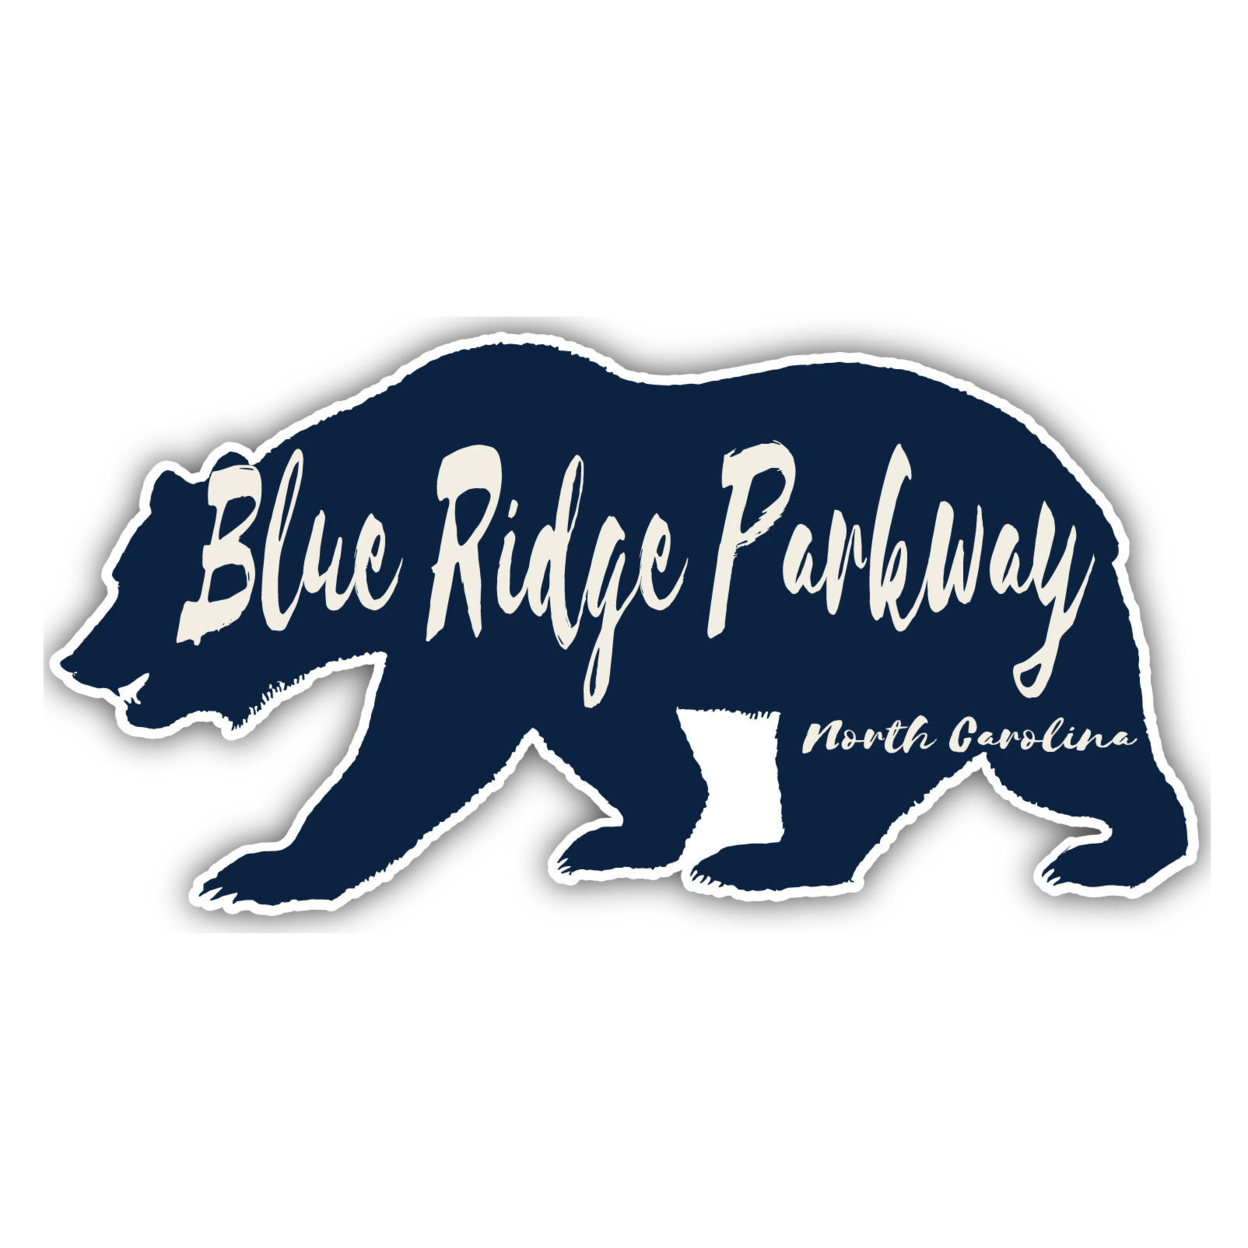 Blue Ridge Parkway North Carolina Souvenir Decorative Stickers (Choose Theme And Size) - 4-Pack, 4-Inch, Bear